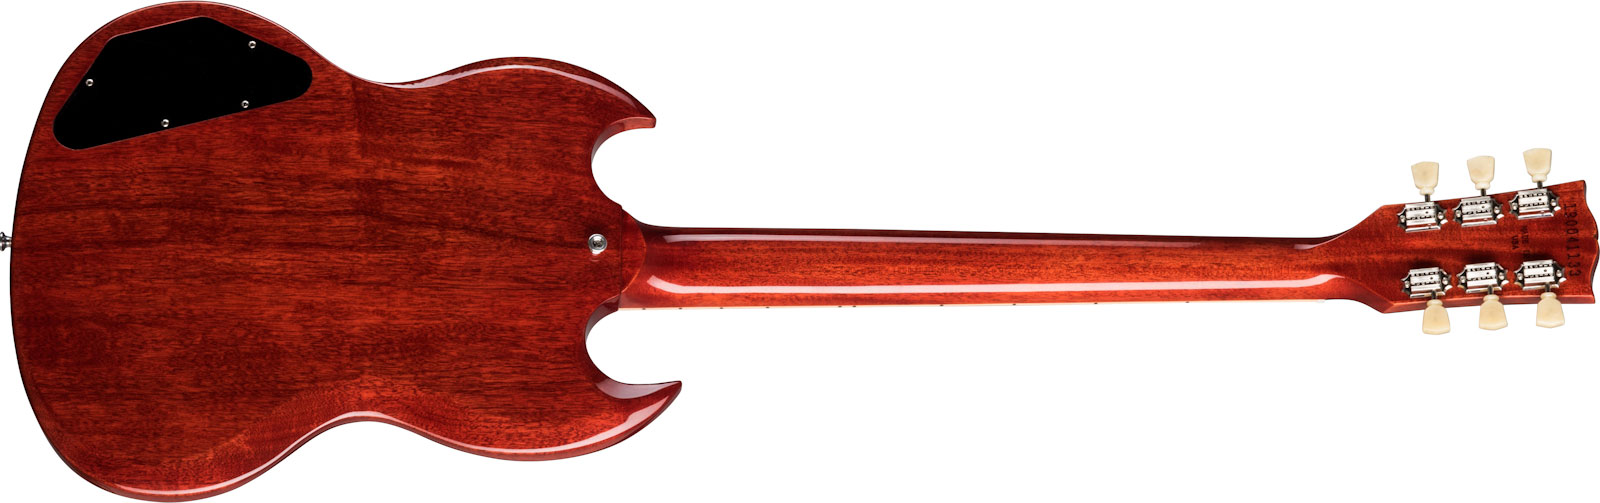 Gibson Sg Standard '61 Maestro Vibrola Original 2h Trem Rw - Retro-rock elektrische gitaar - Variation 1